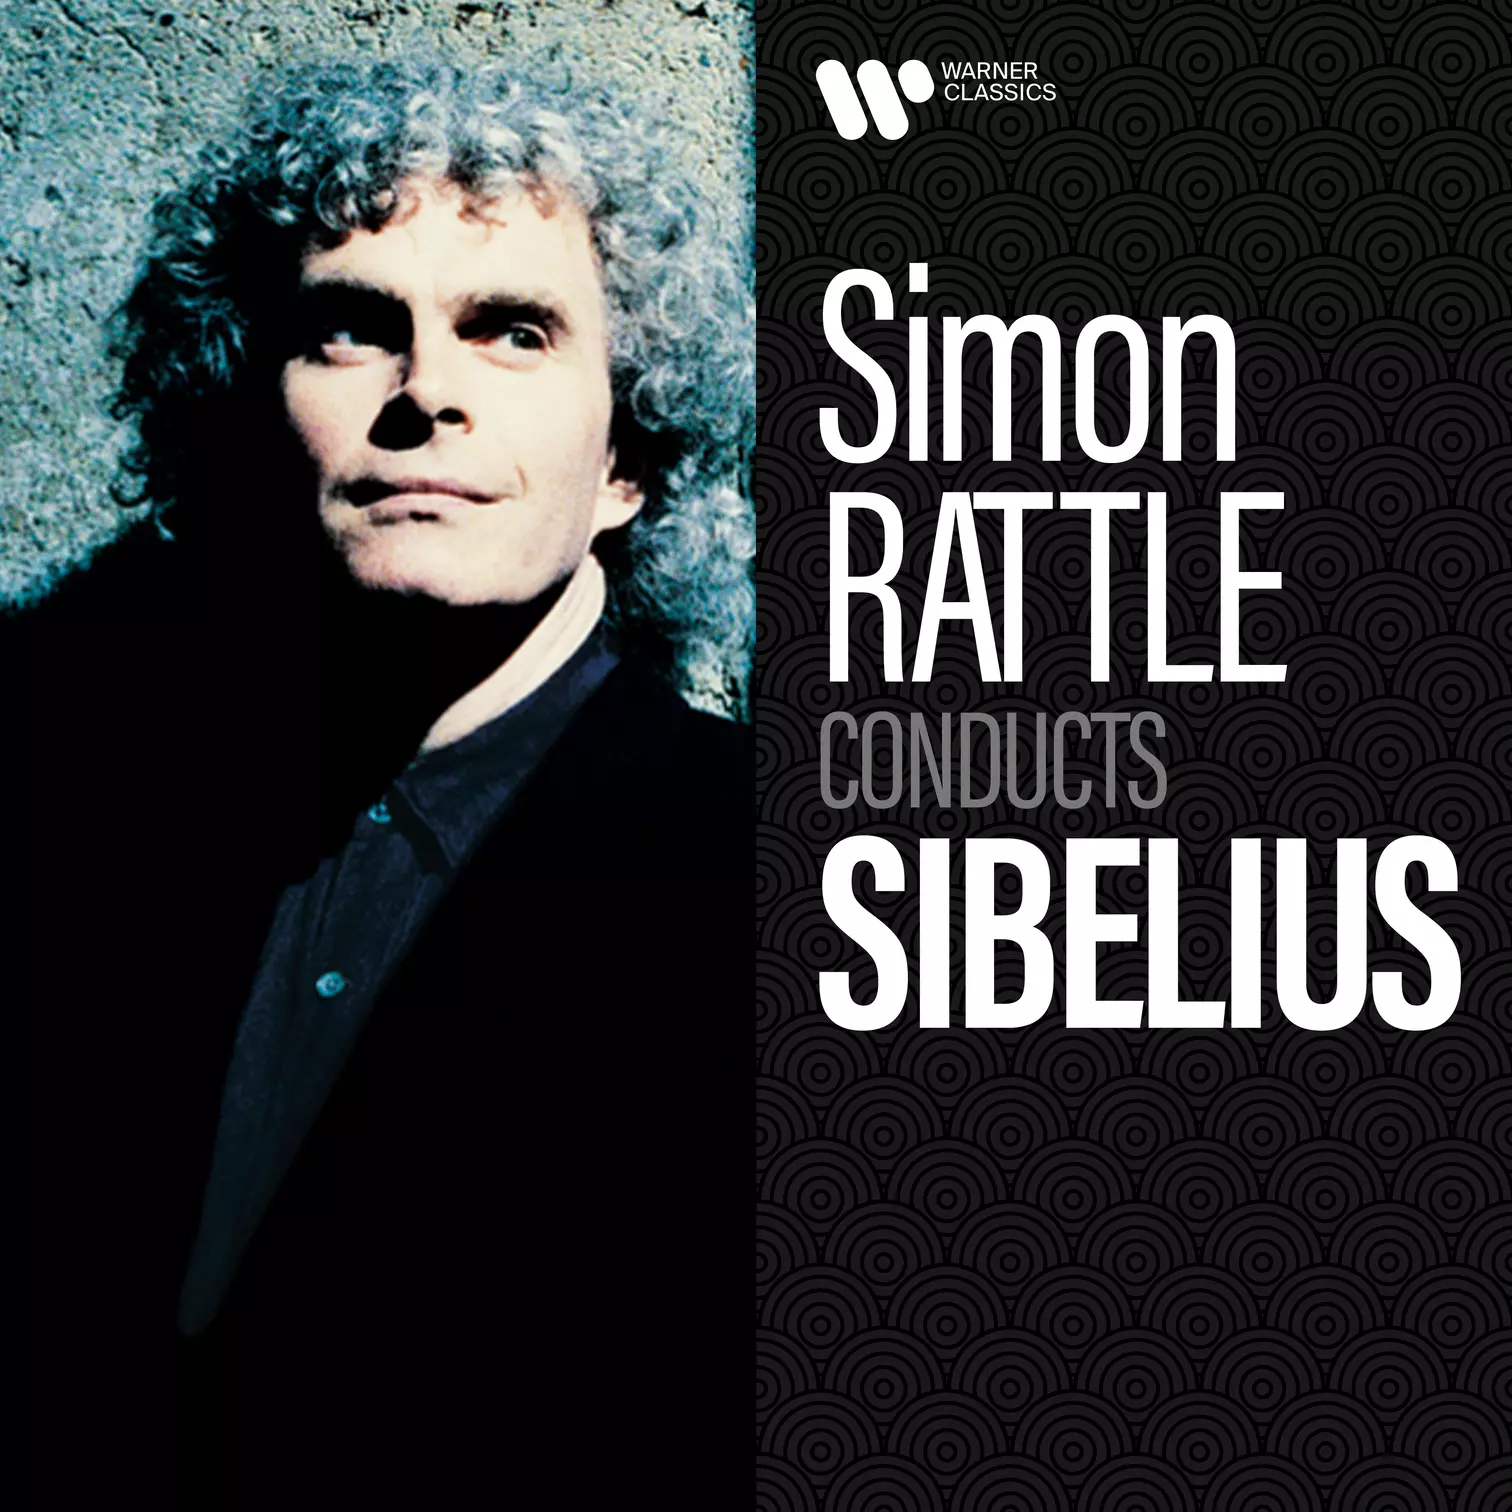 Simon Rattle Conducts Sibelius